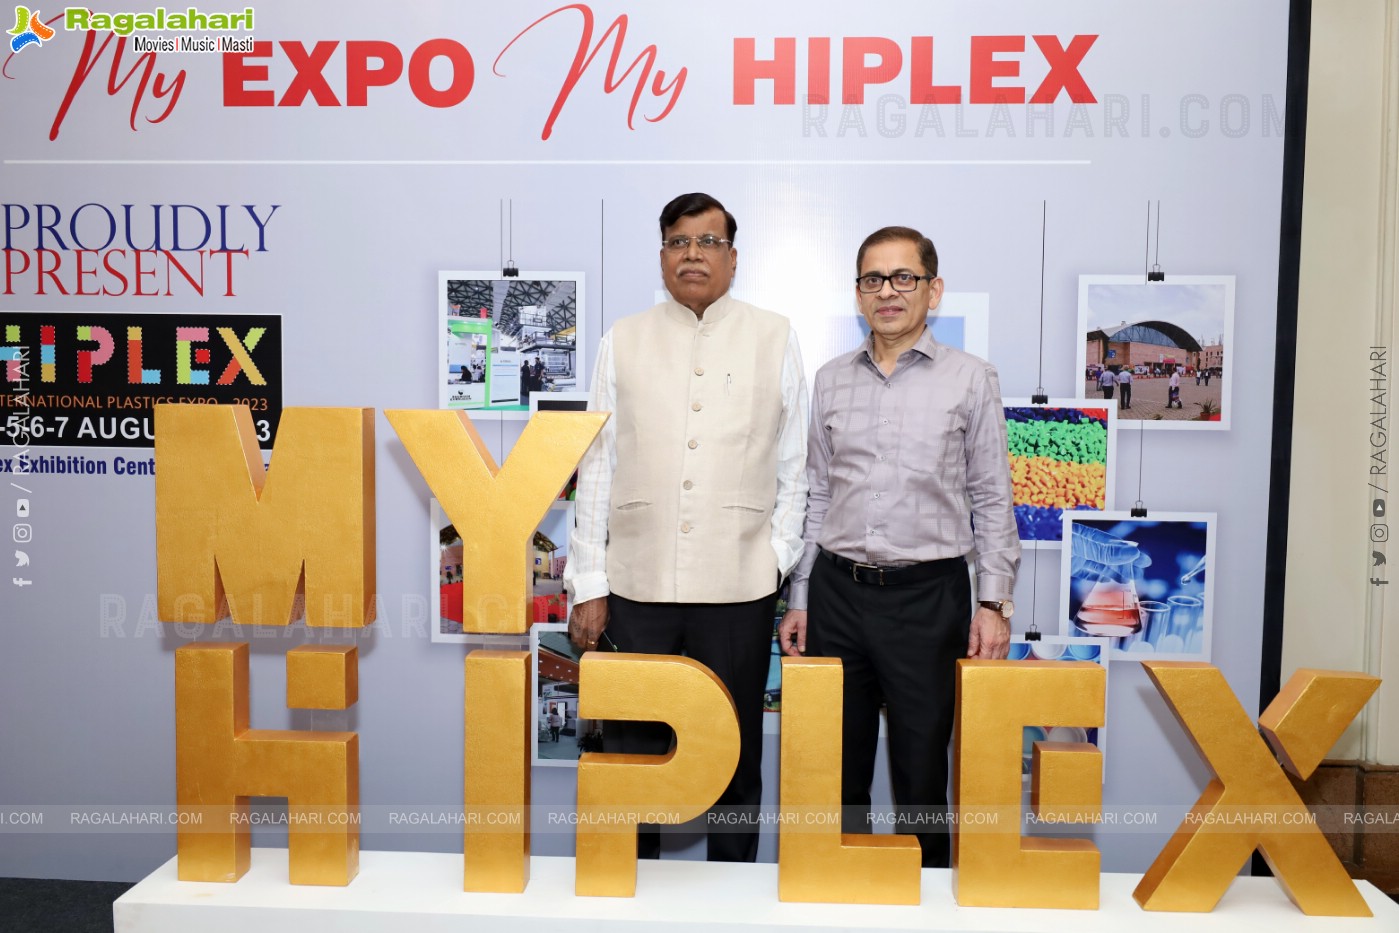 HIPLEX International Plastics Expo-2023 Promotion Event, Hyderabad